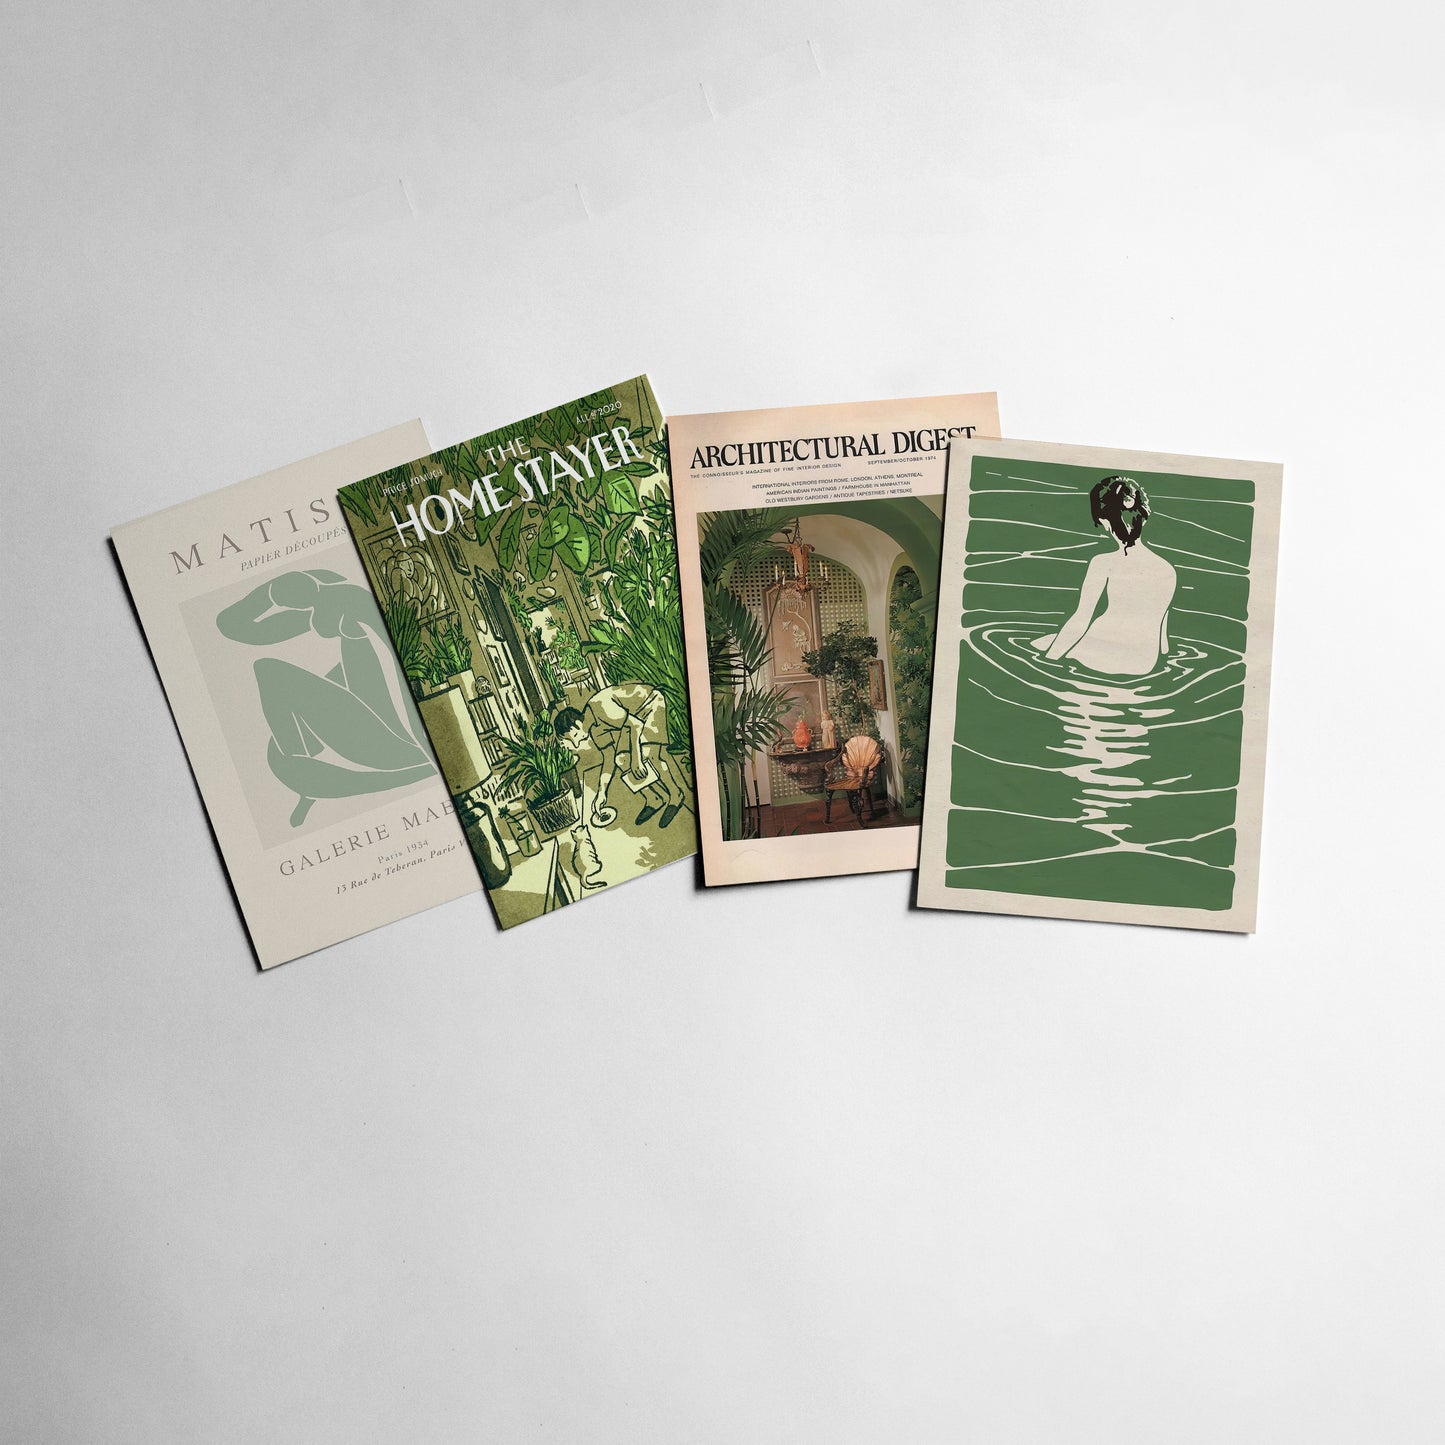 Green Kit - 51 Prints (4x 6 - Postcard size) - Nukkad Studios